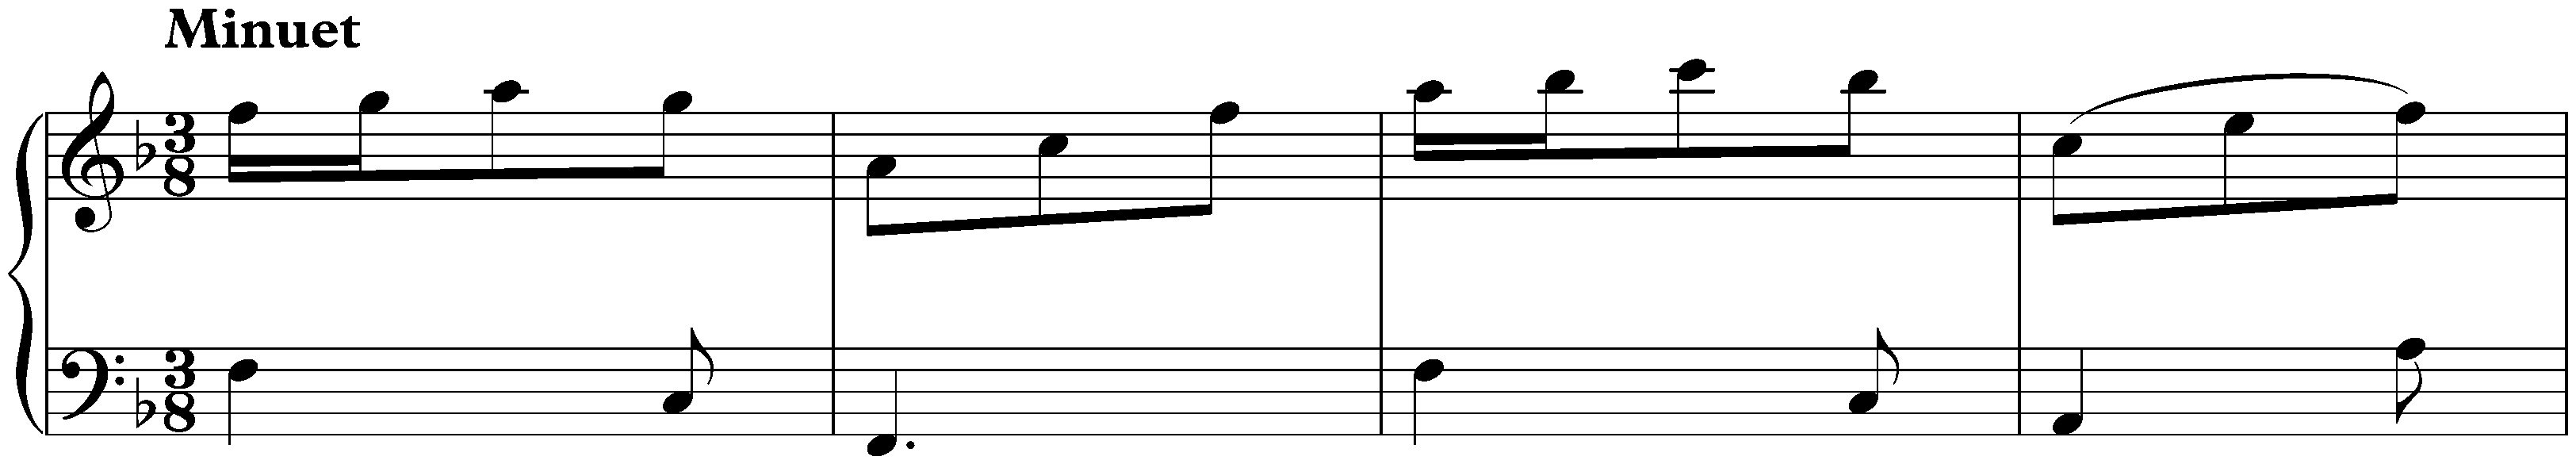 Sonata in F major, K. 78; 2. Minuet